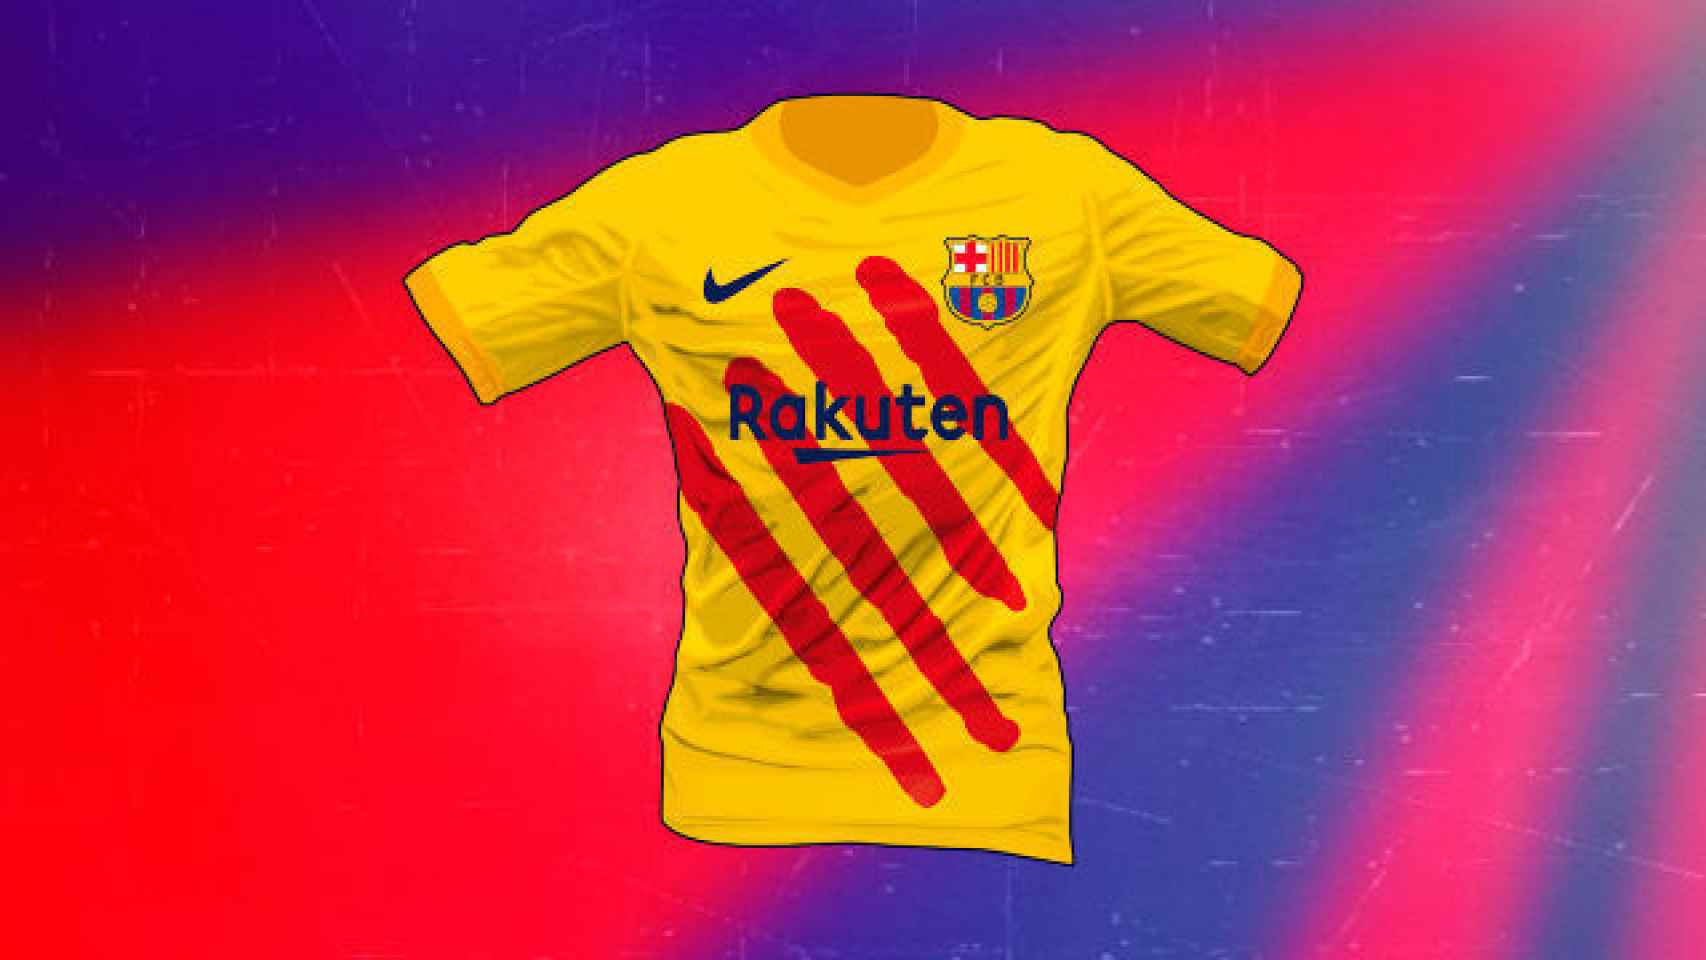 equipaciones fc barcelona 2019